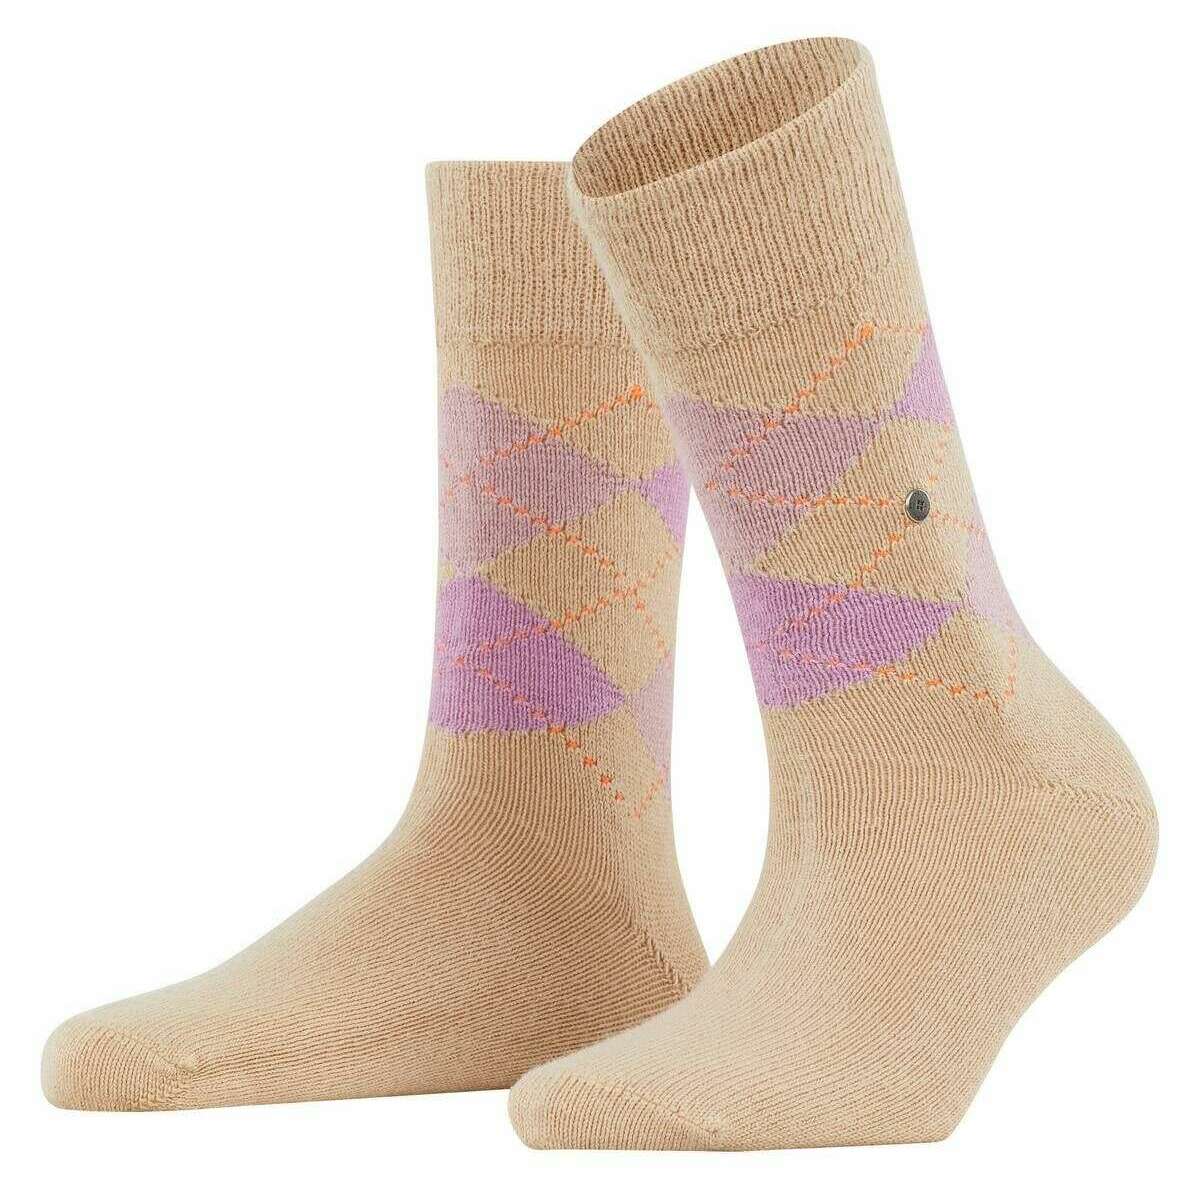 Burlington Whitby Socks - Camel Beige/Pink